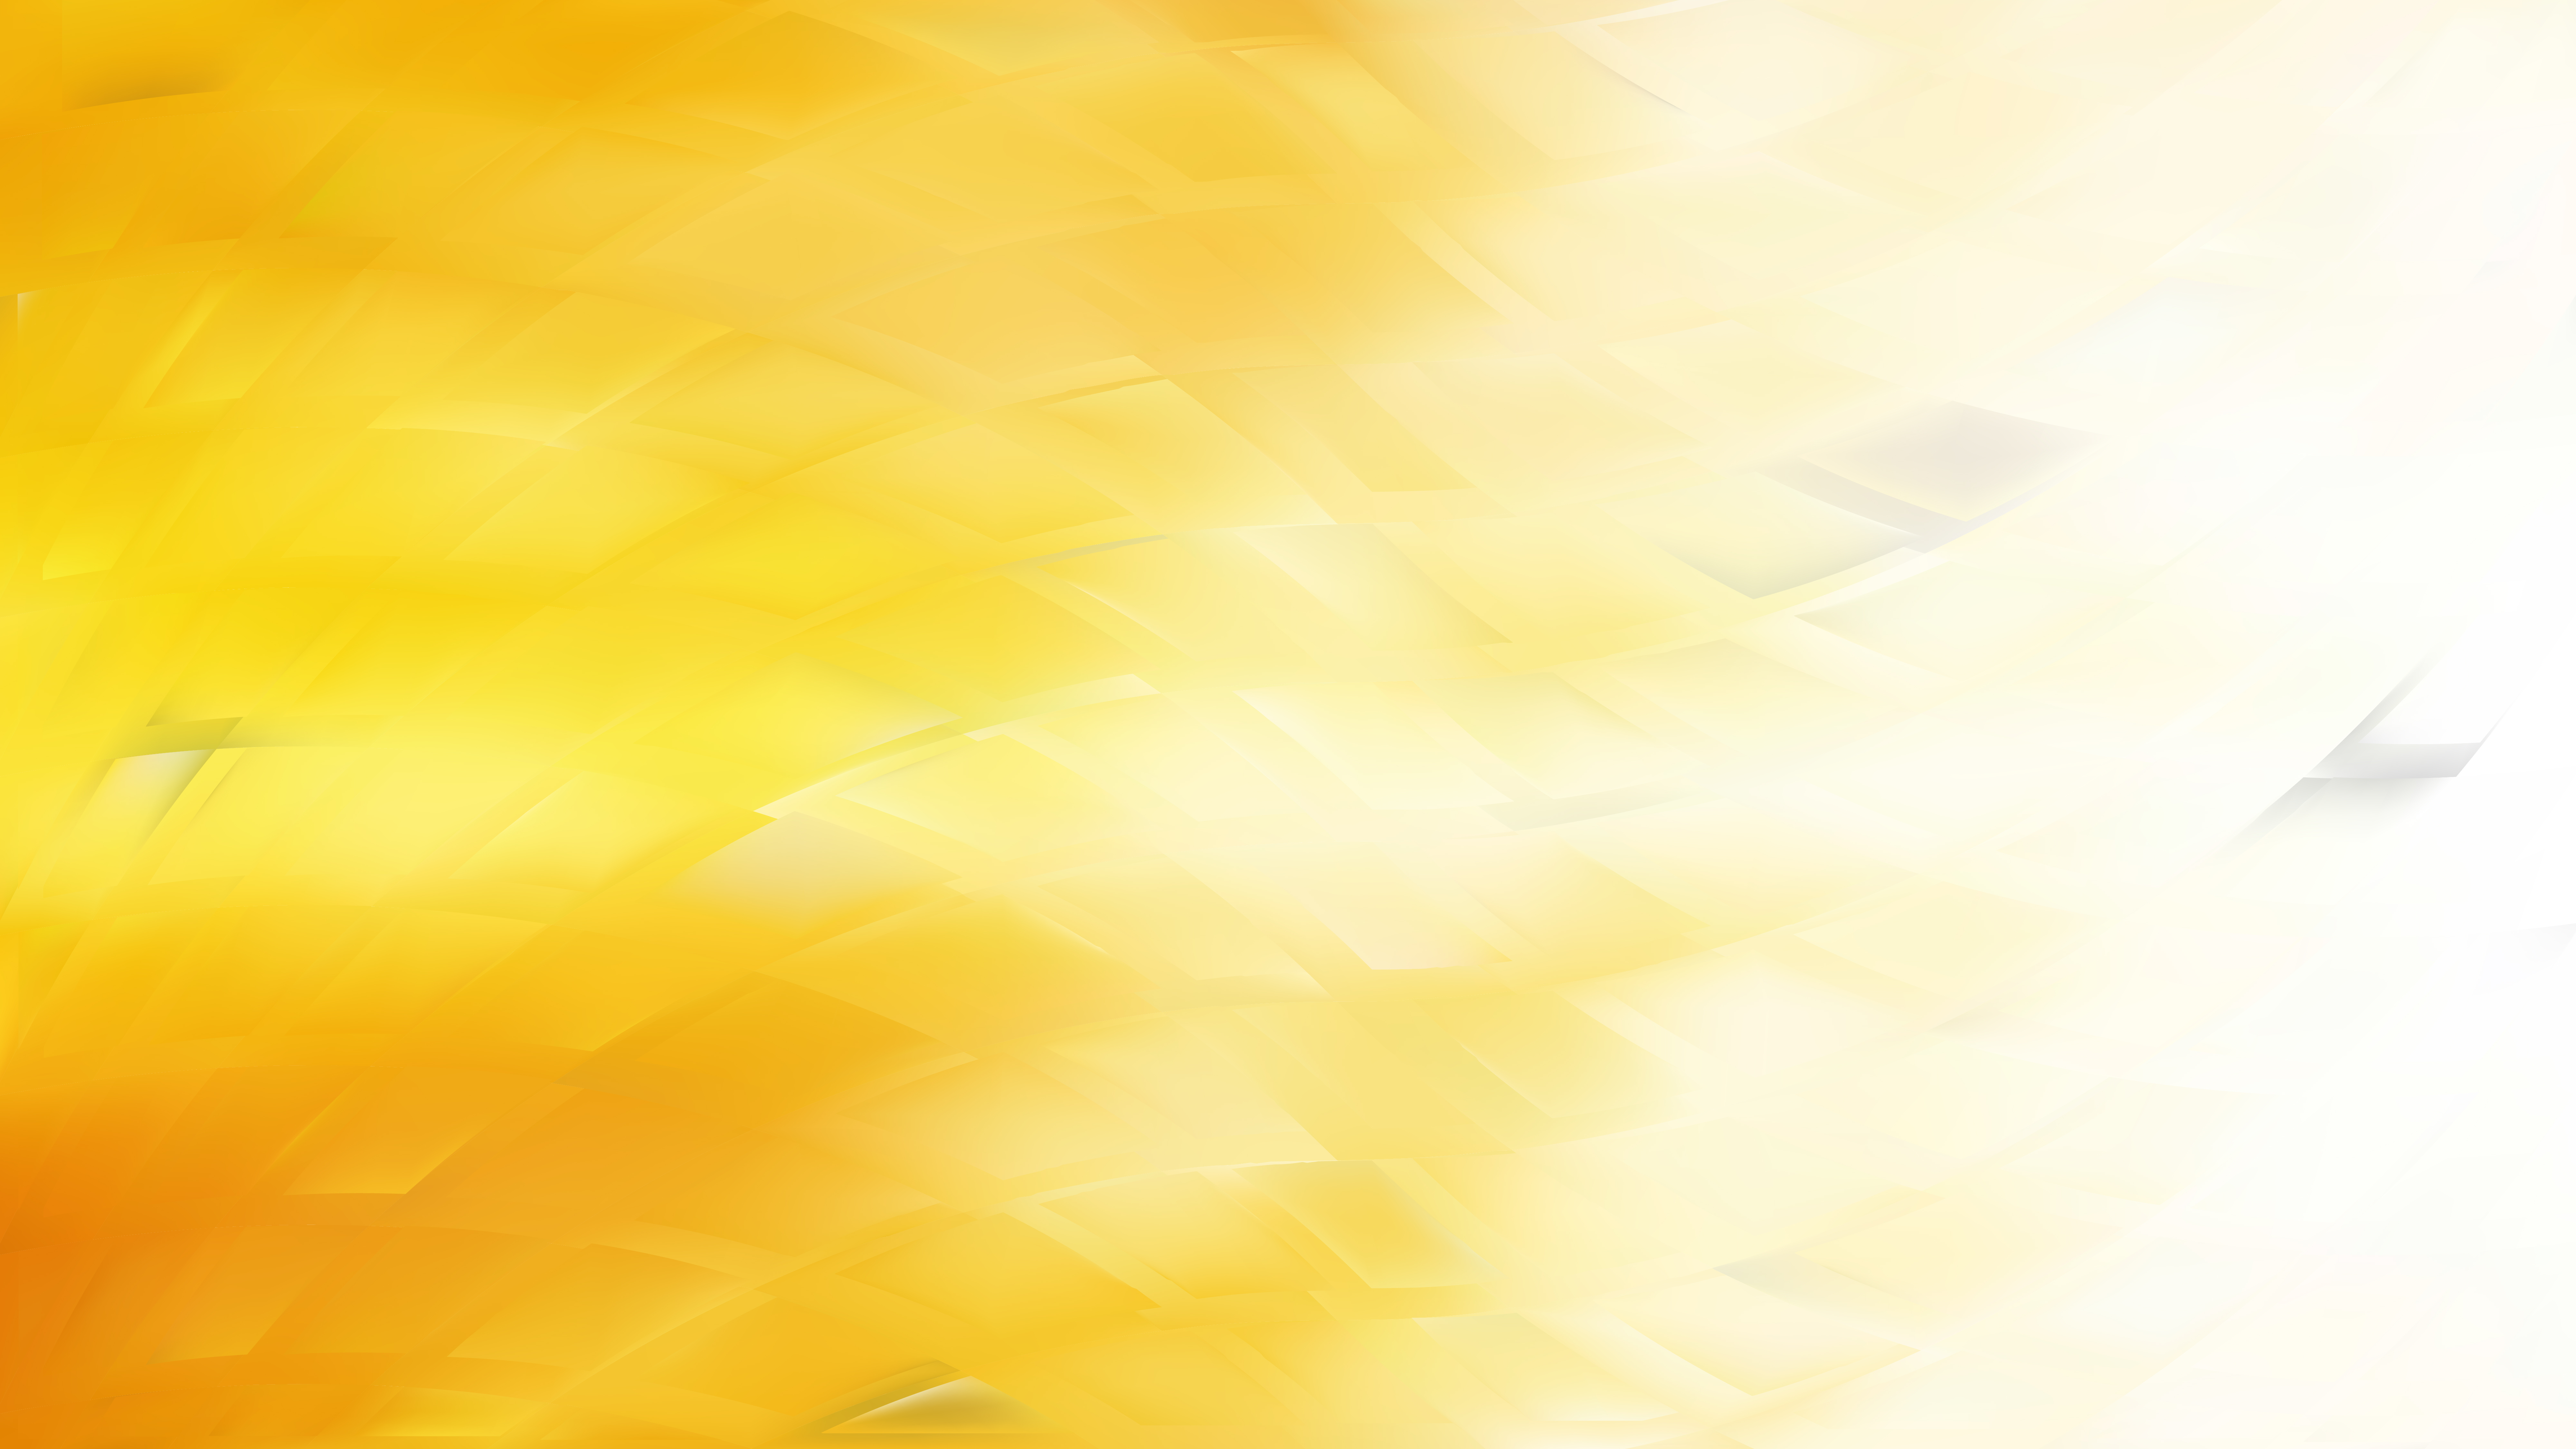 Free Light Orange Abstract Background Vector Illustration